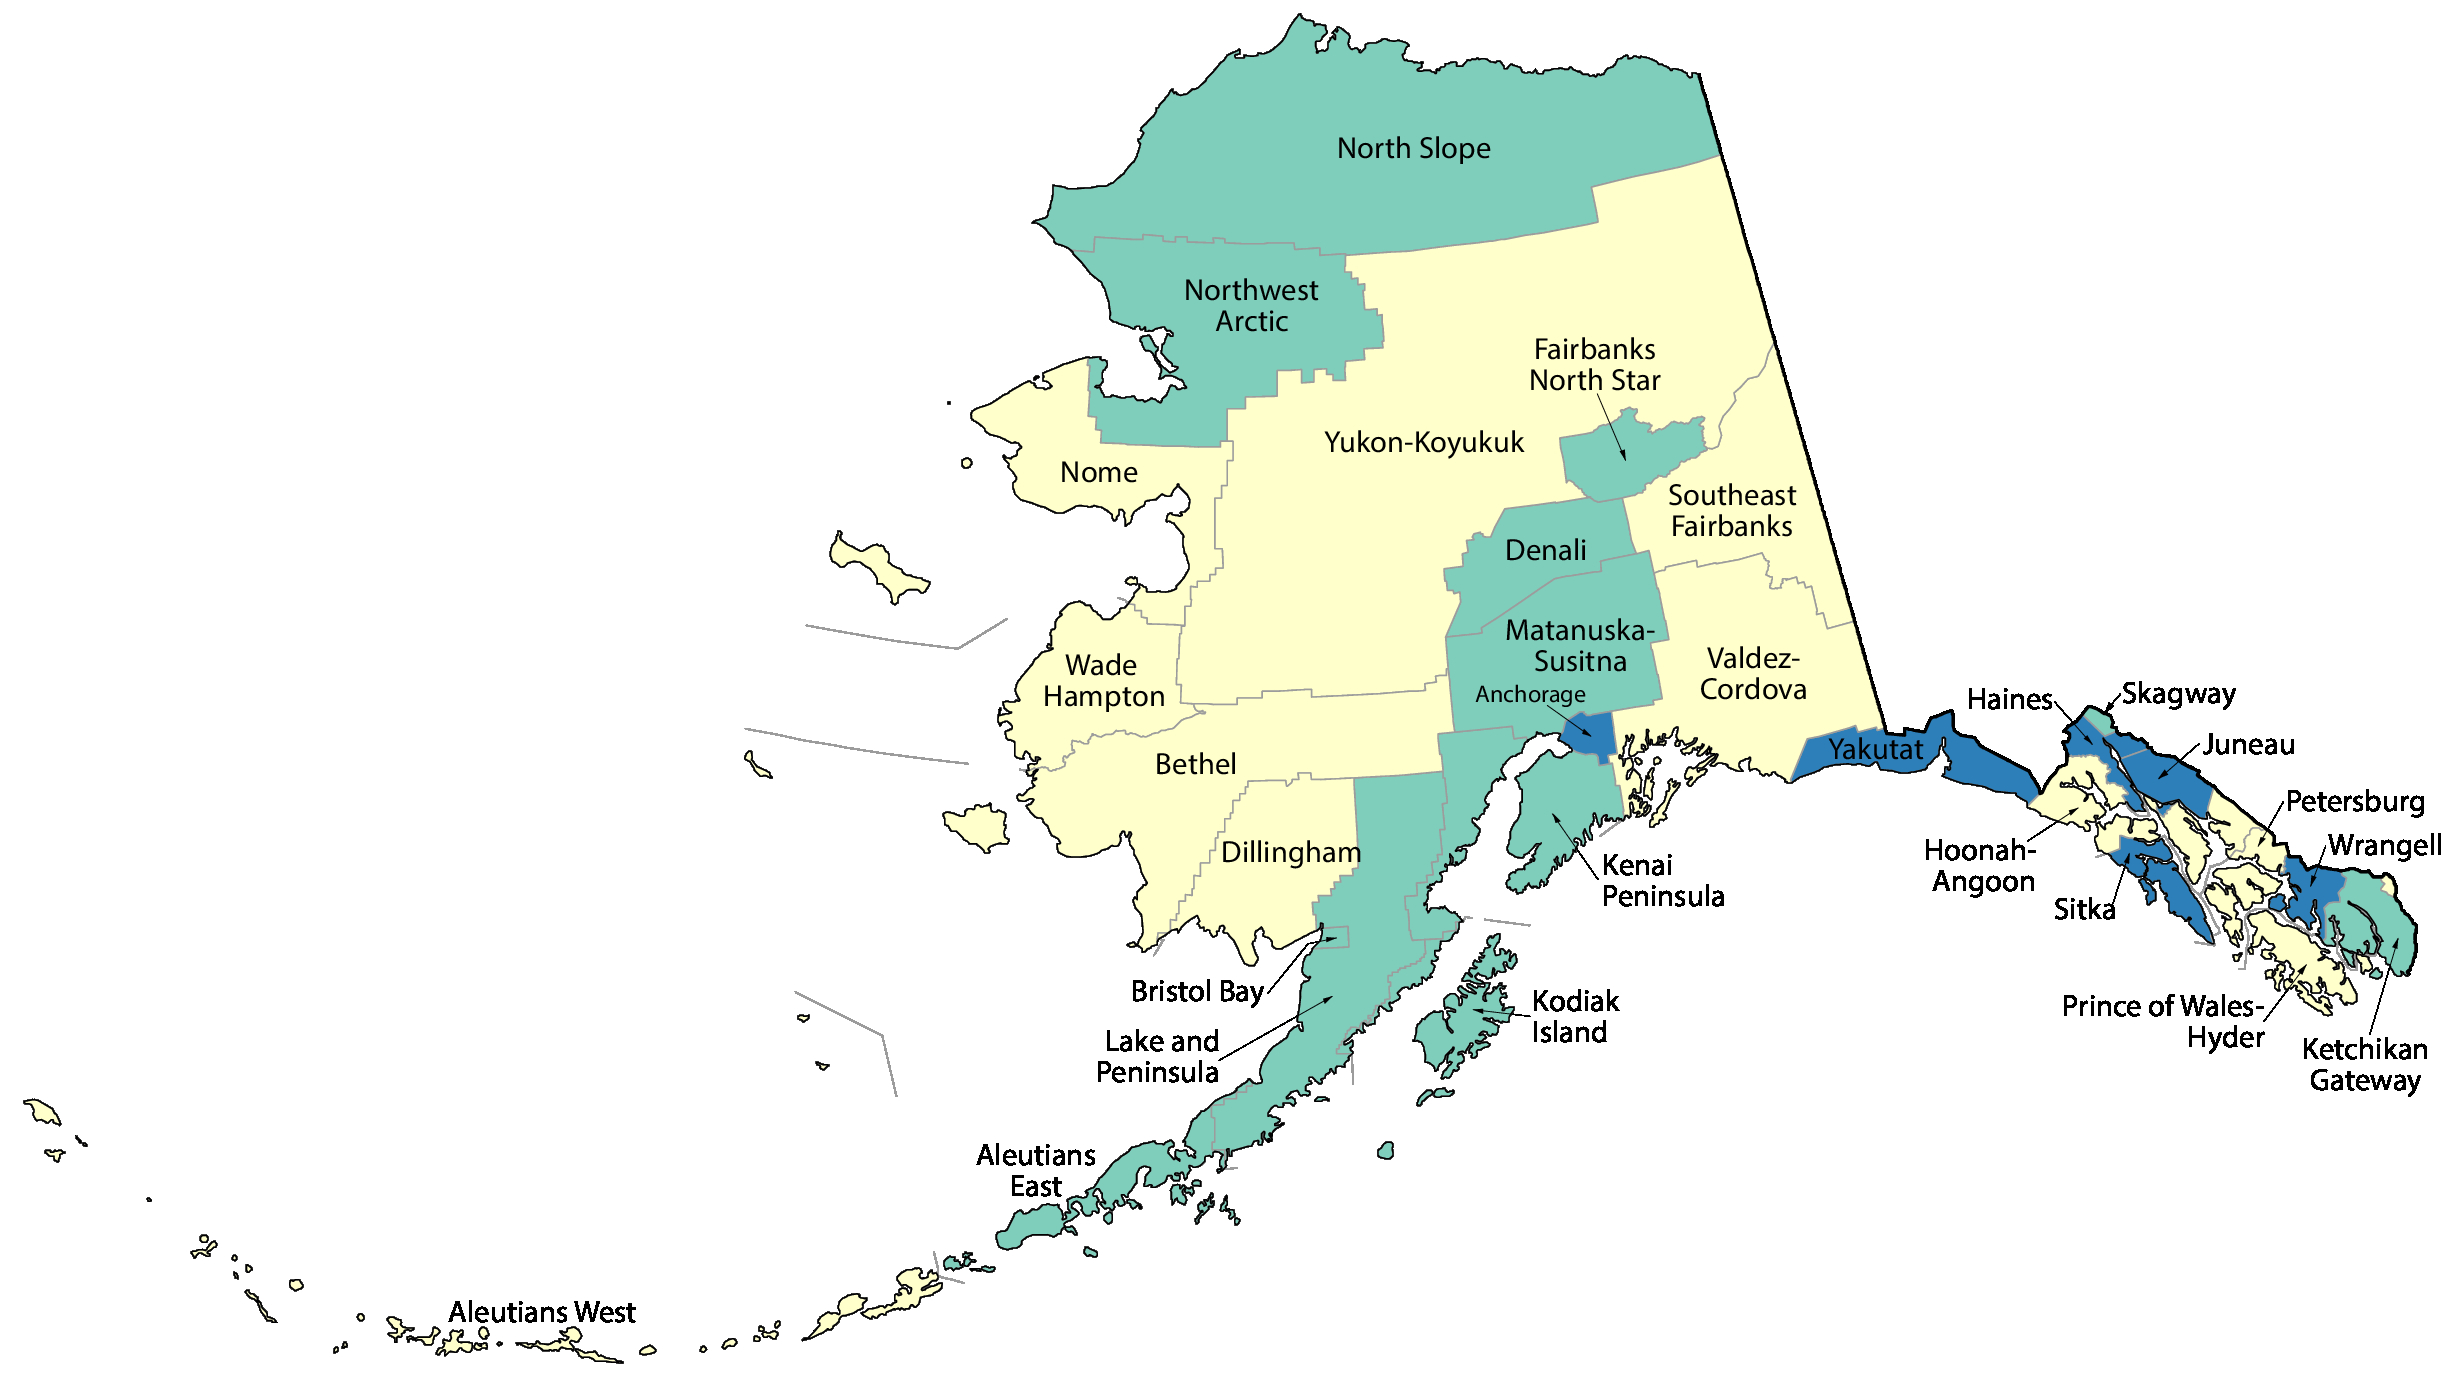 Alaska_boroughs_and_census_areas (1)